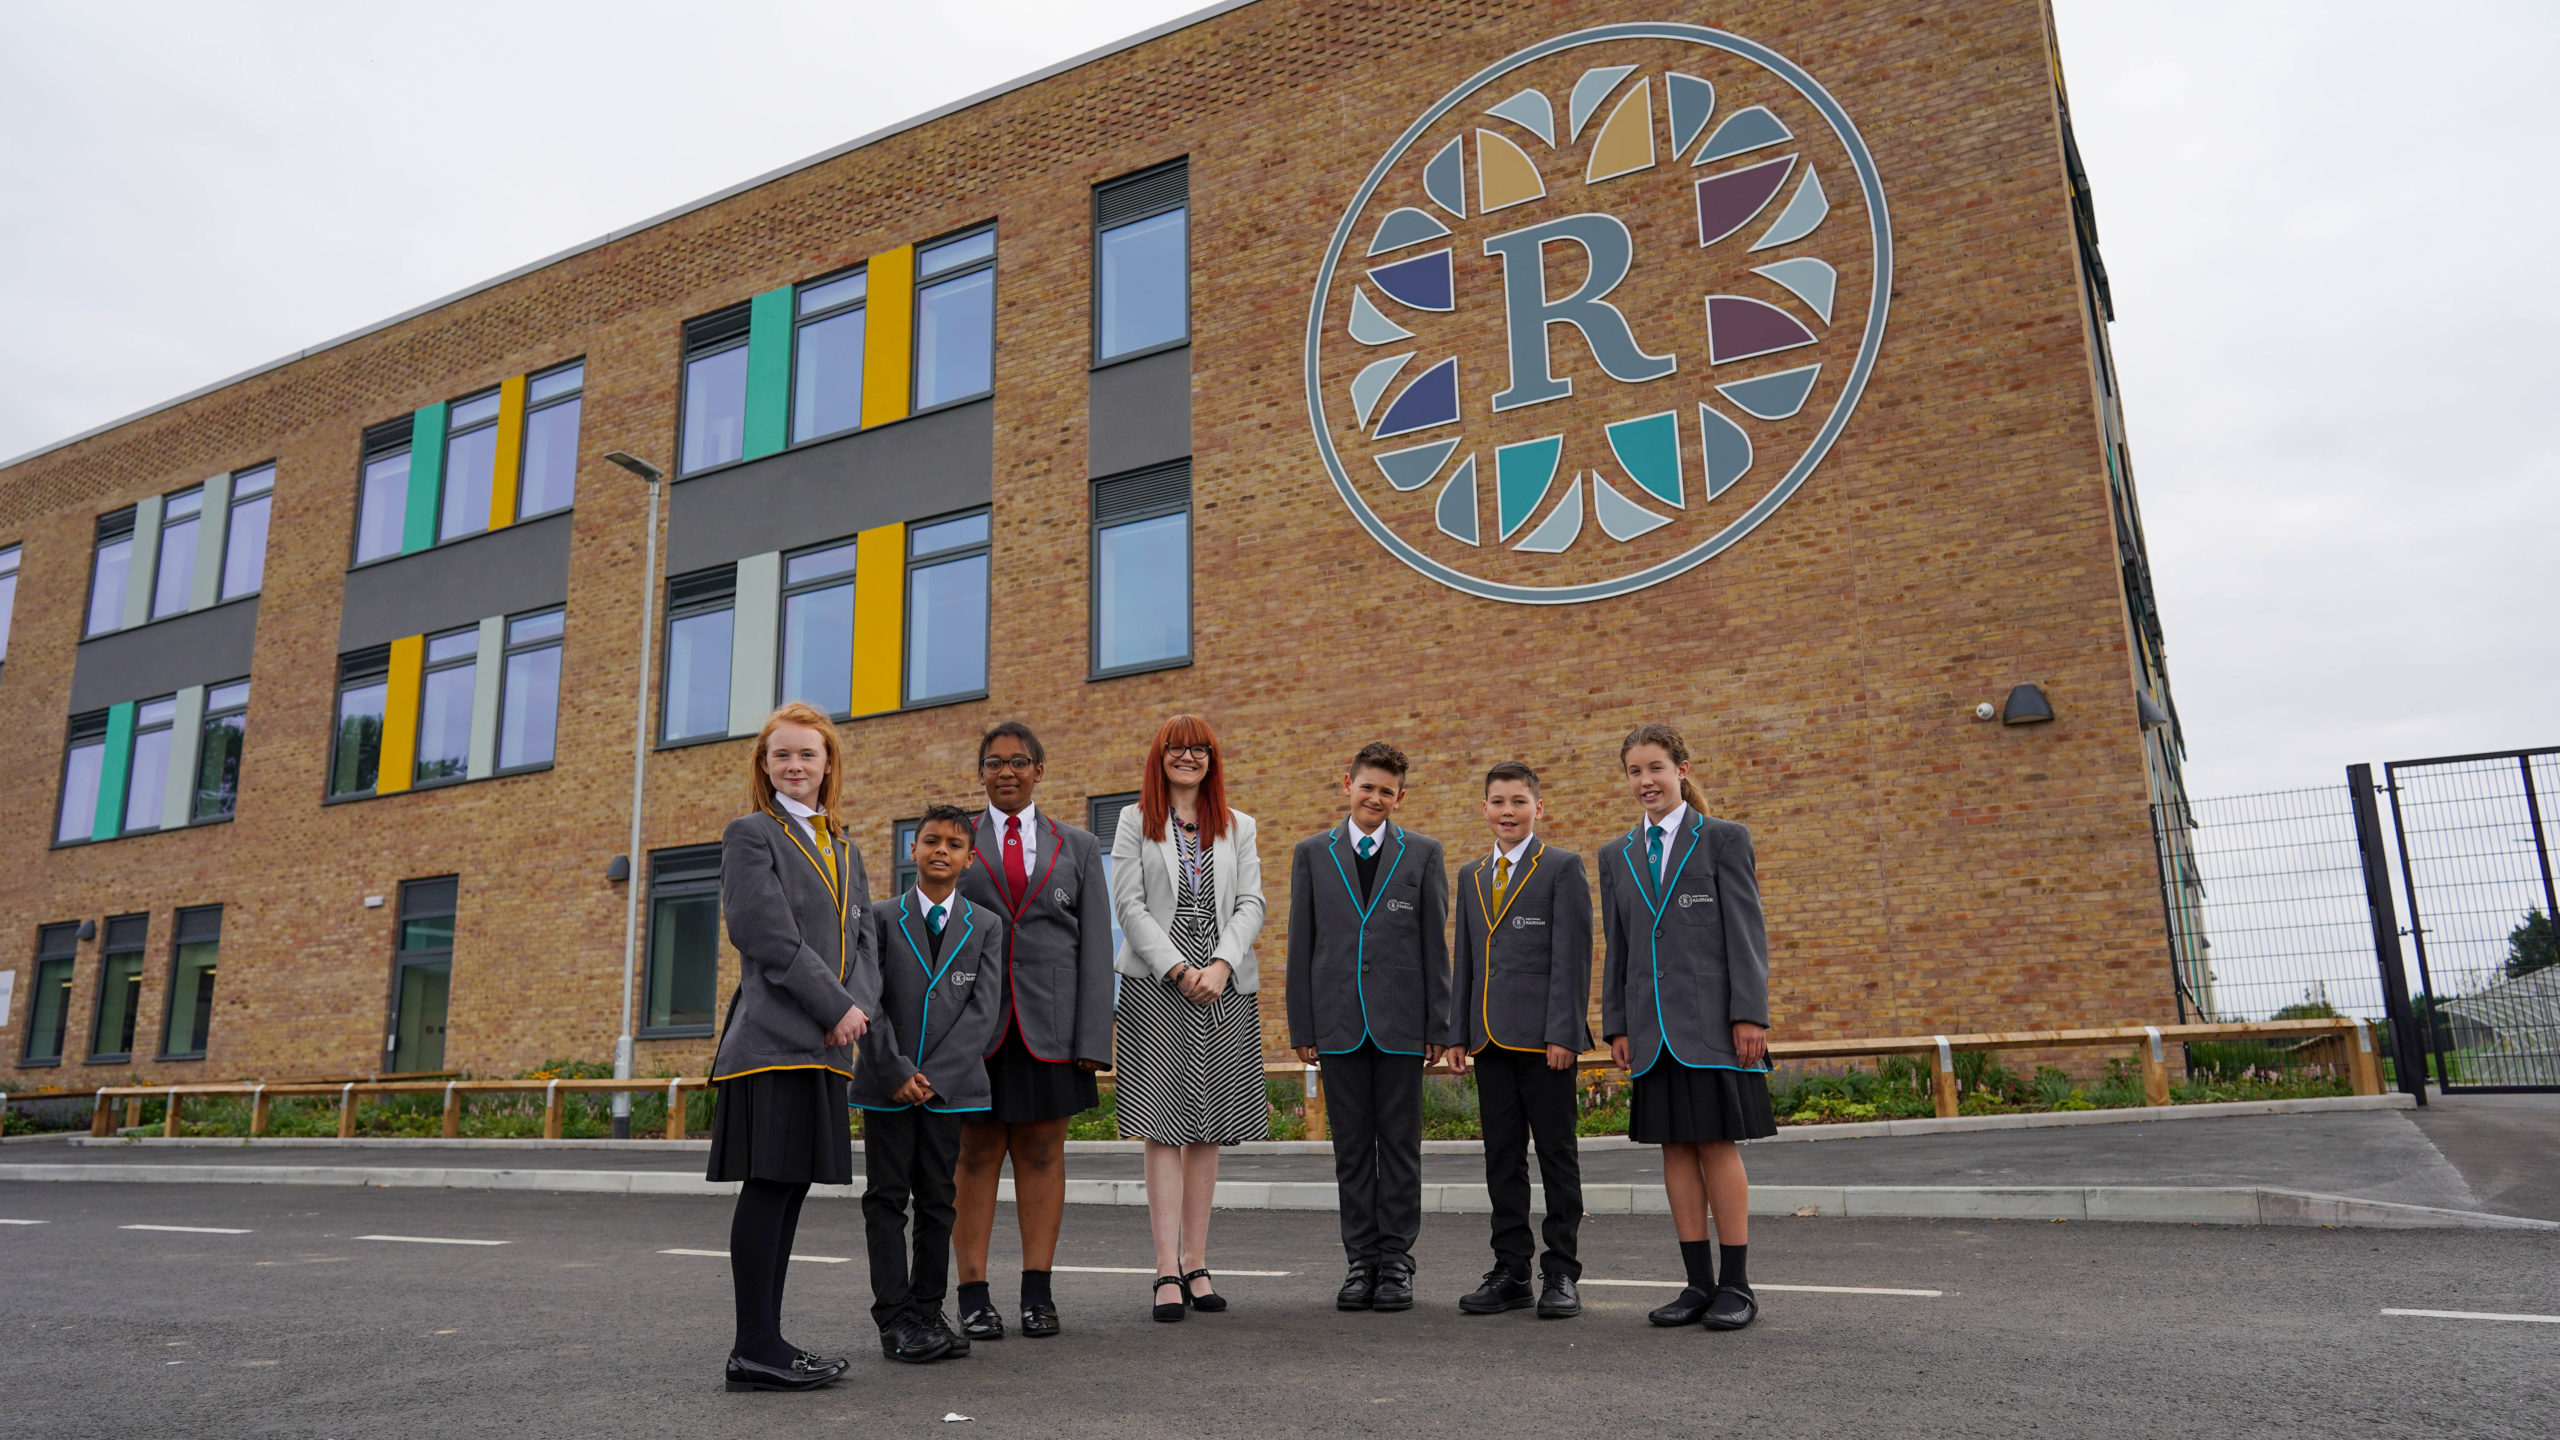 Six Leigh Academy Rainham students are seen posing for a photo outside the academy building, alongside the Principal, Alex Millward.